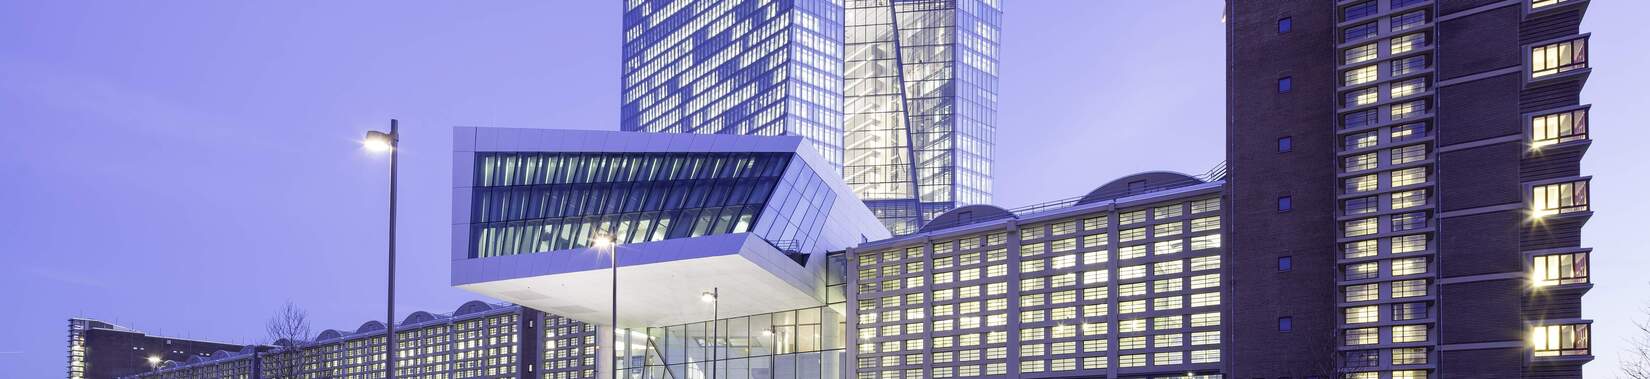 Europese Centrale Bank Frankfurt